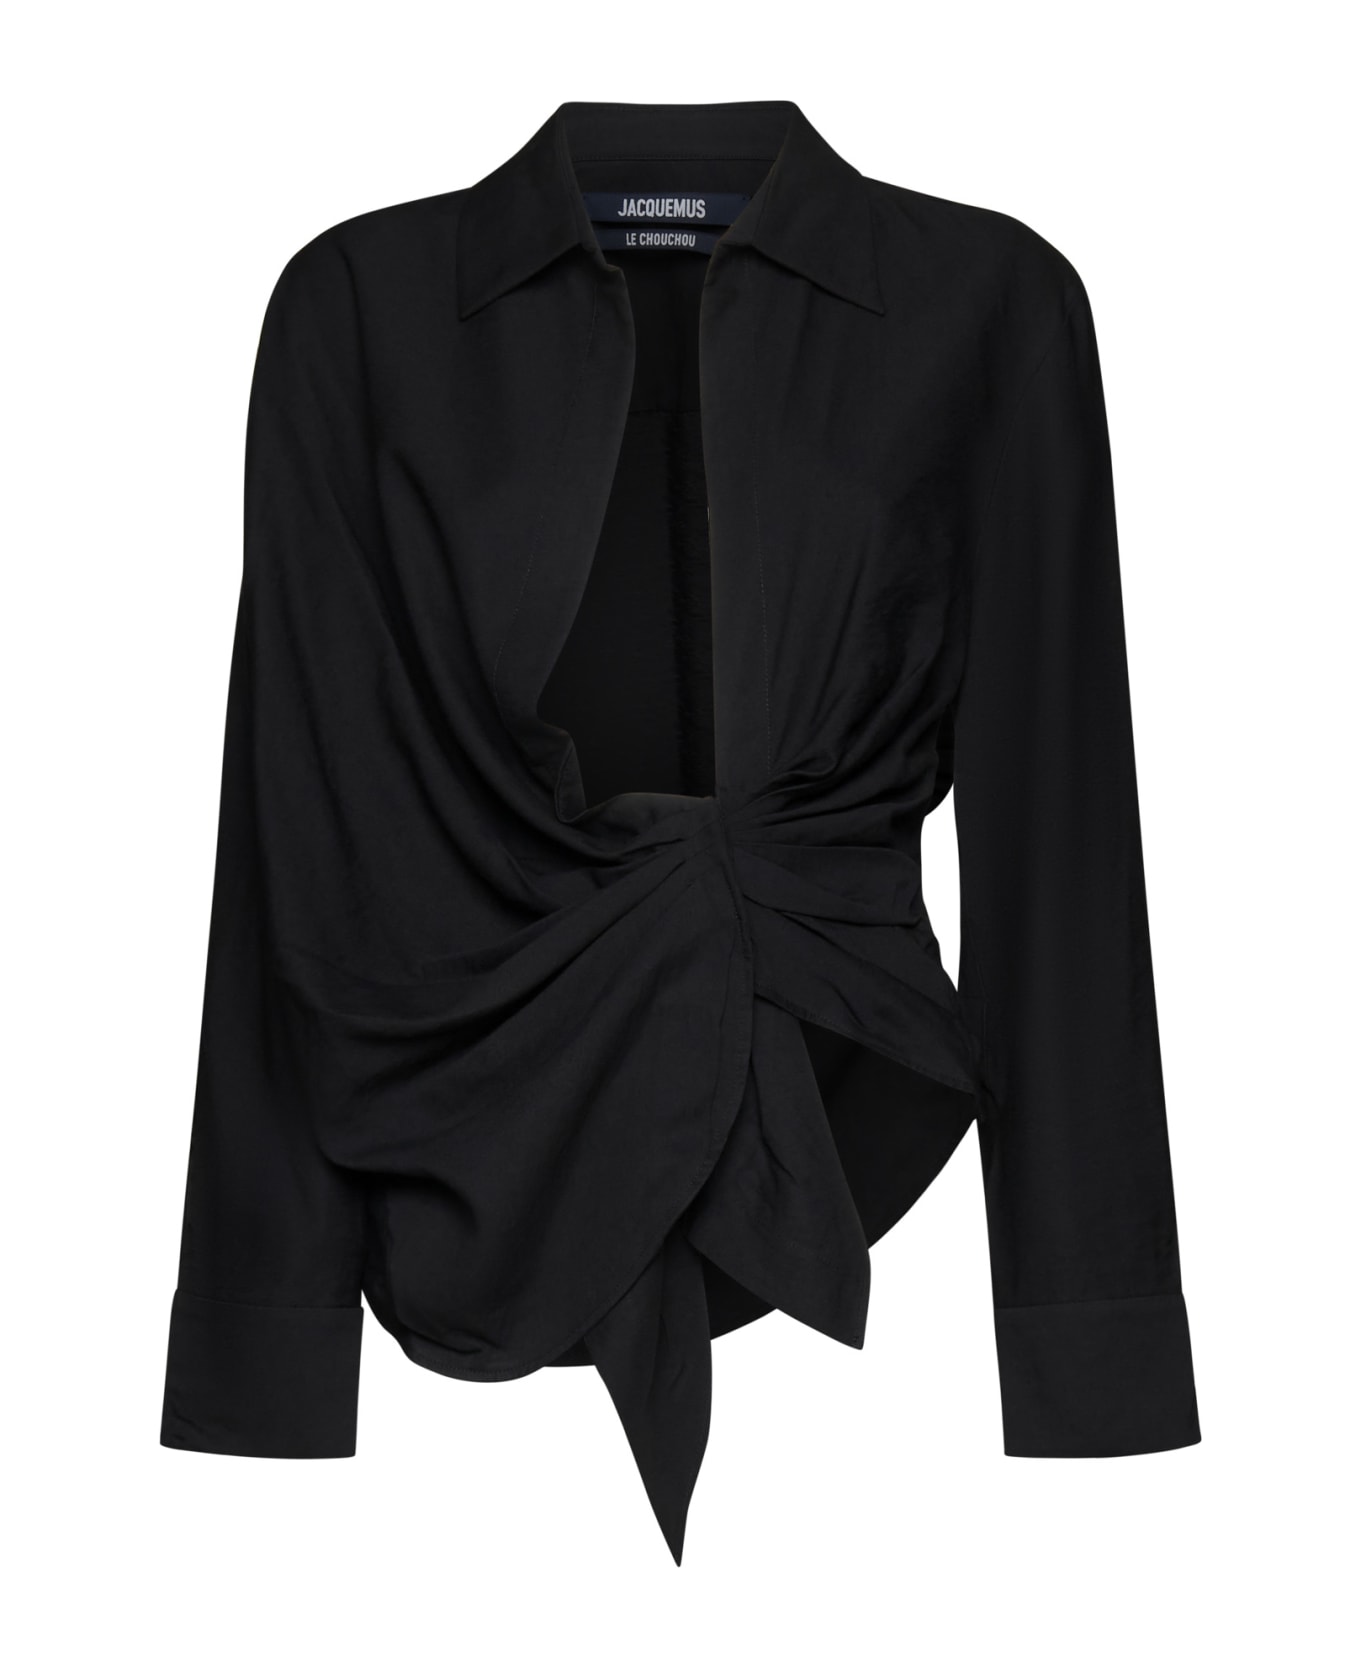 Jacquemus Bahlia Tie-up Detailed Blouse - Black シャツ